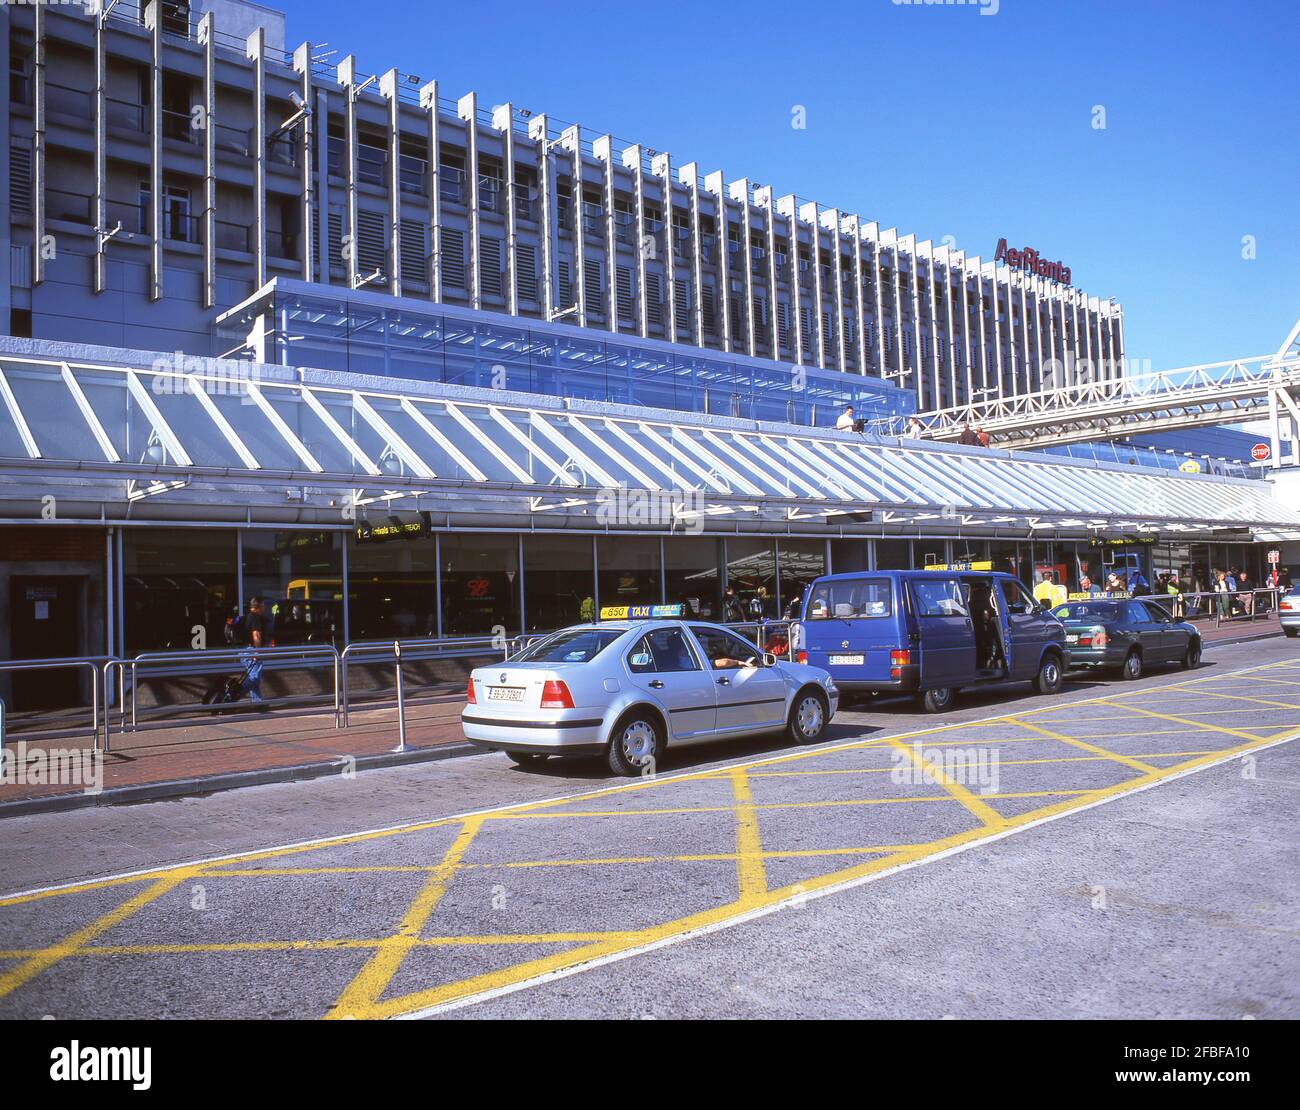 Departure terminal, Dublin Airport (Aerfort Bhaile Átha Cliath), Collinstown, Fingal, Republic of Ireland Stock Photo